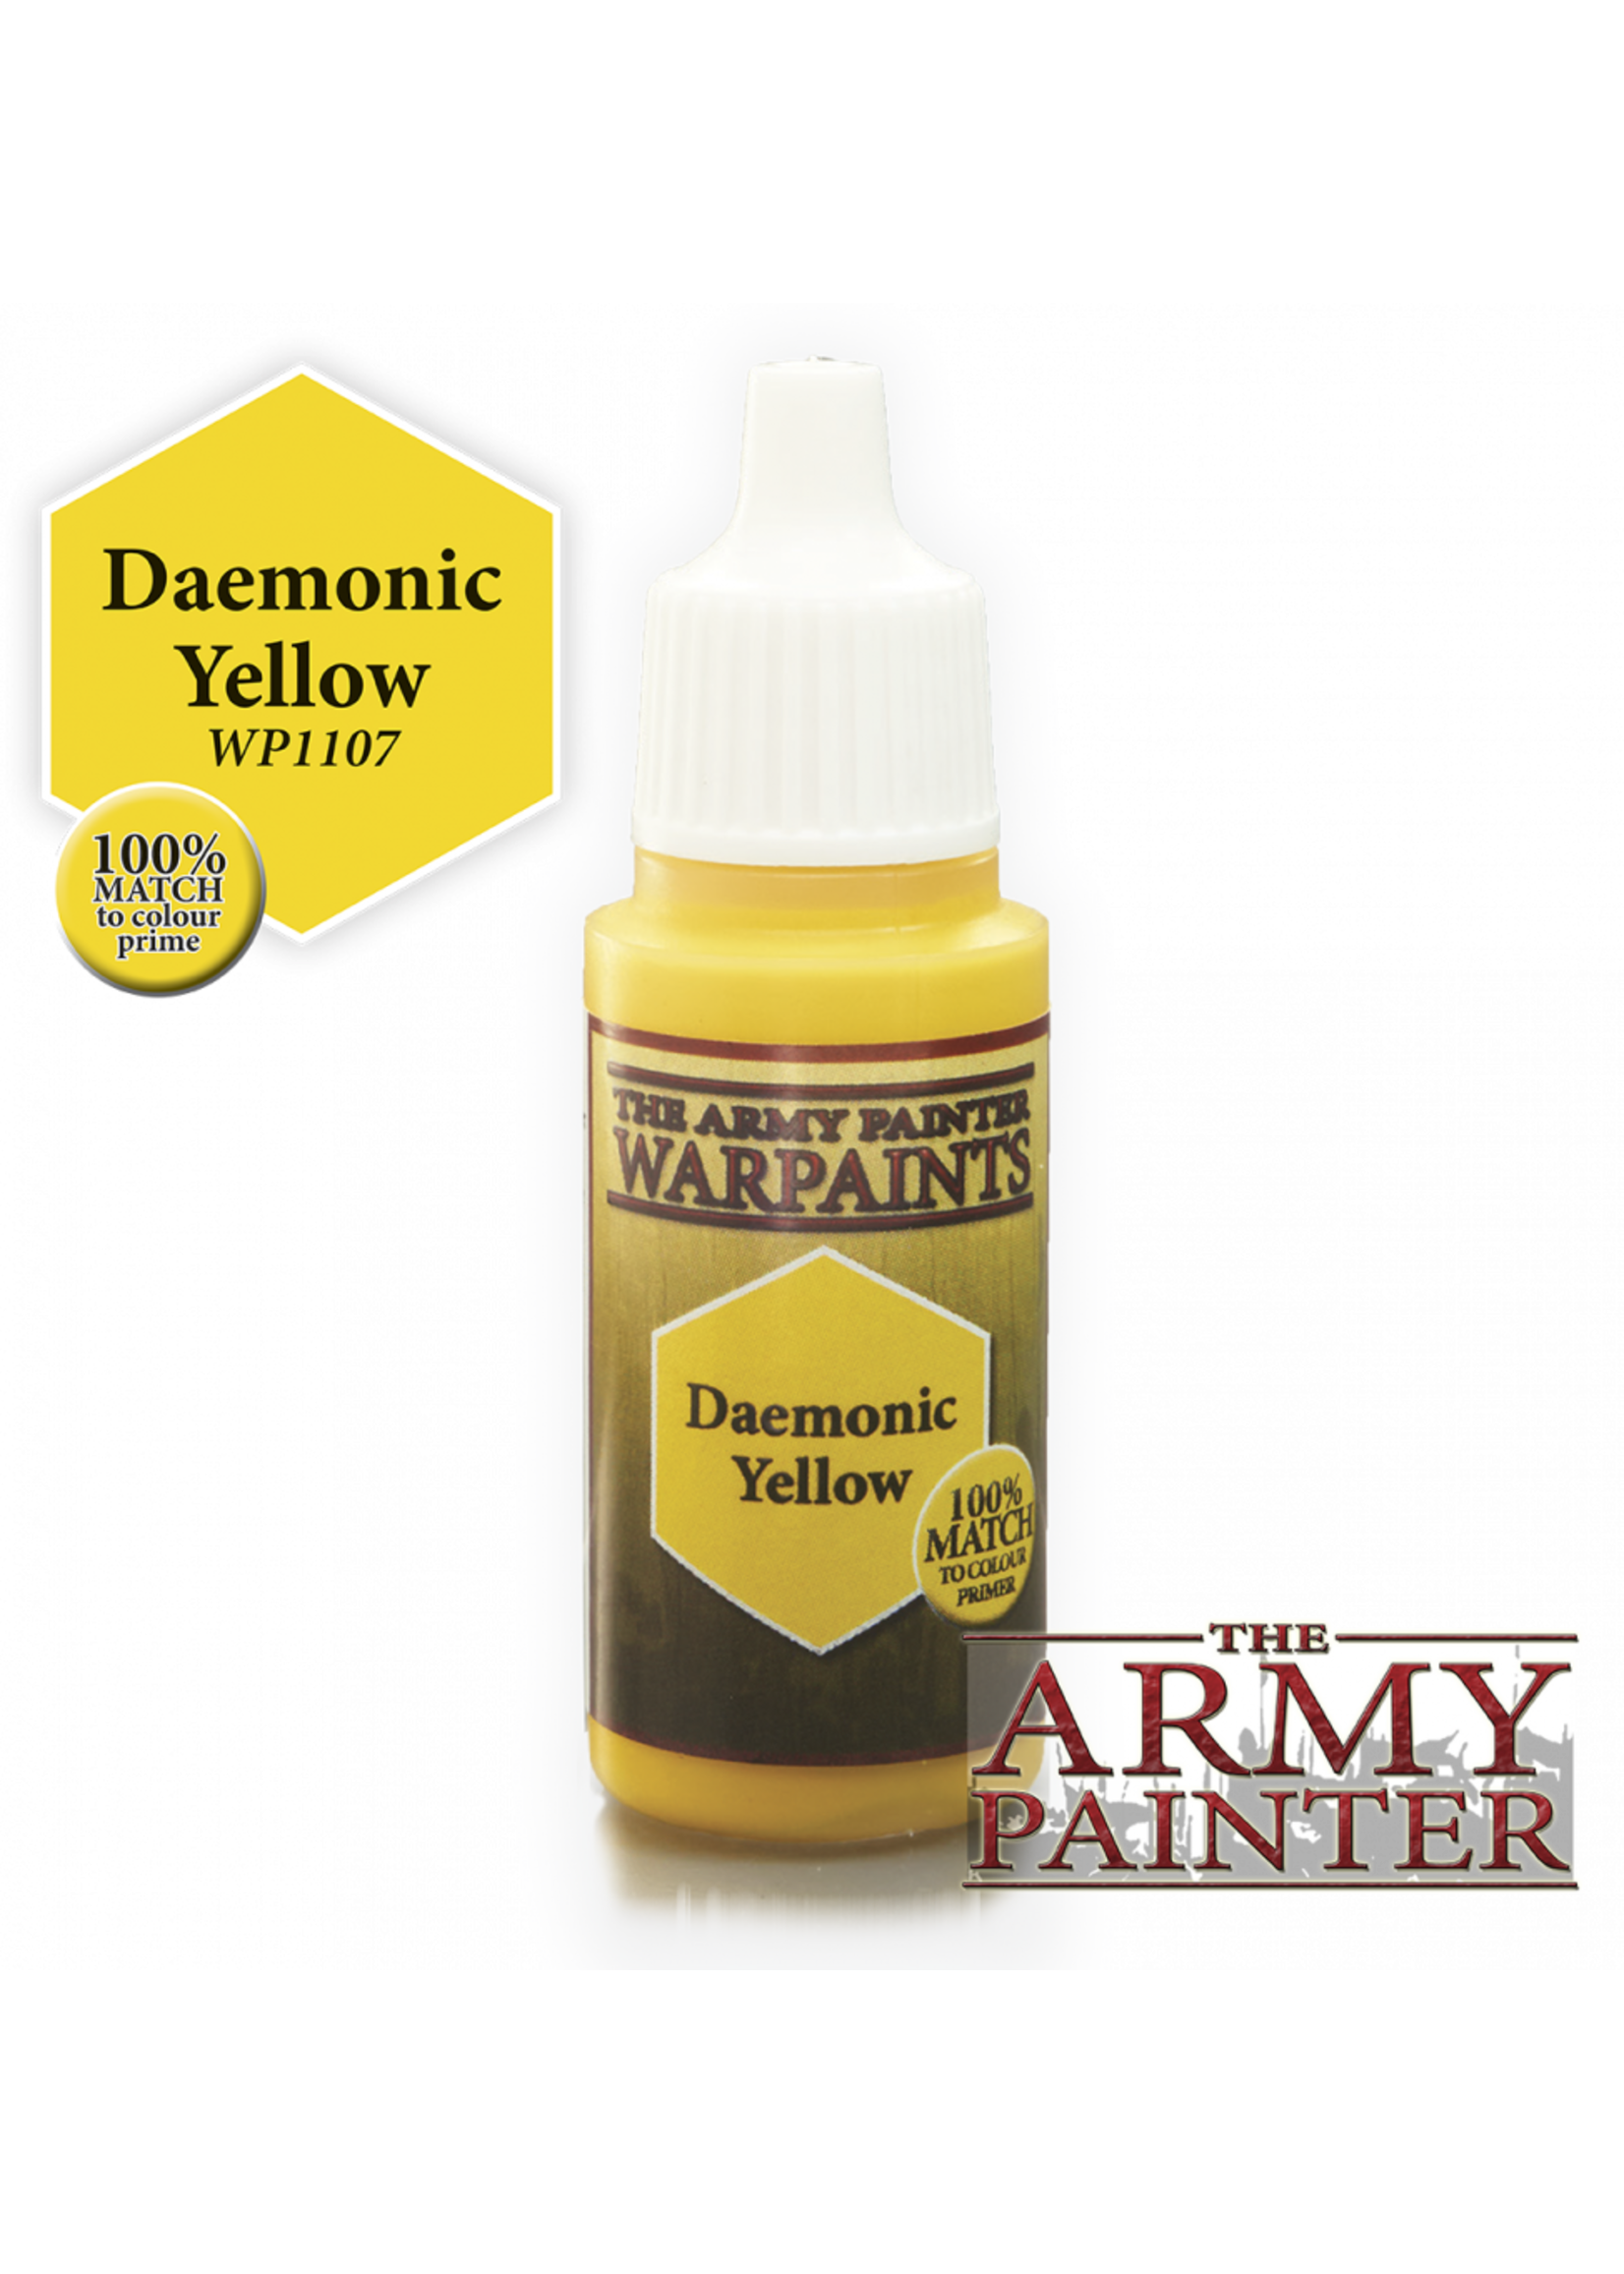 The Army Painter Acrylics Warpaints Daemonic Yellow